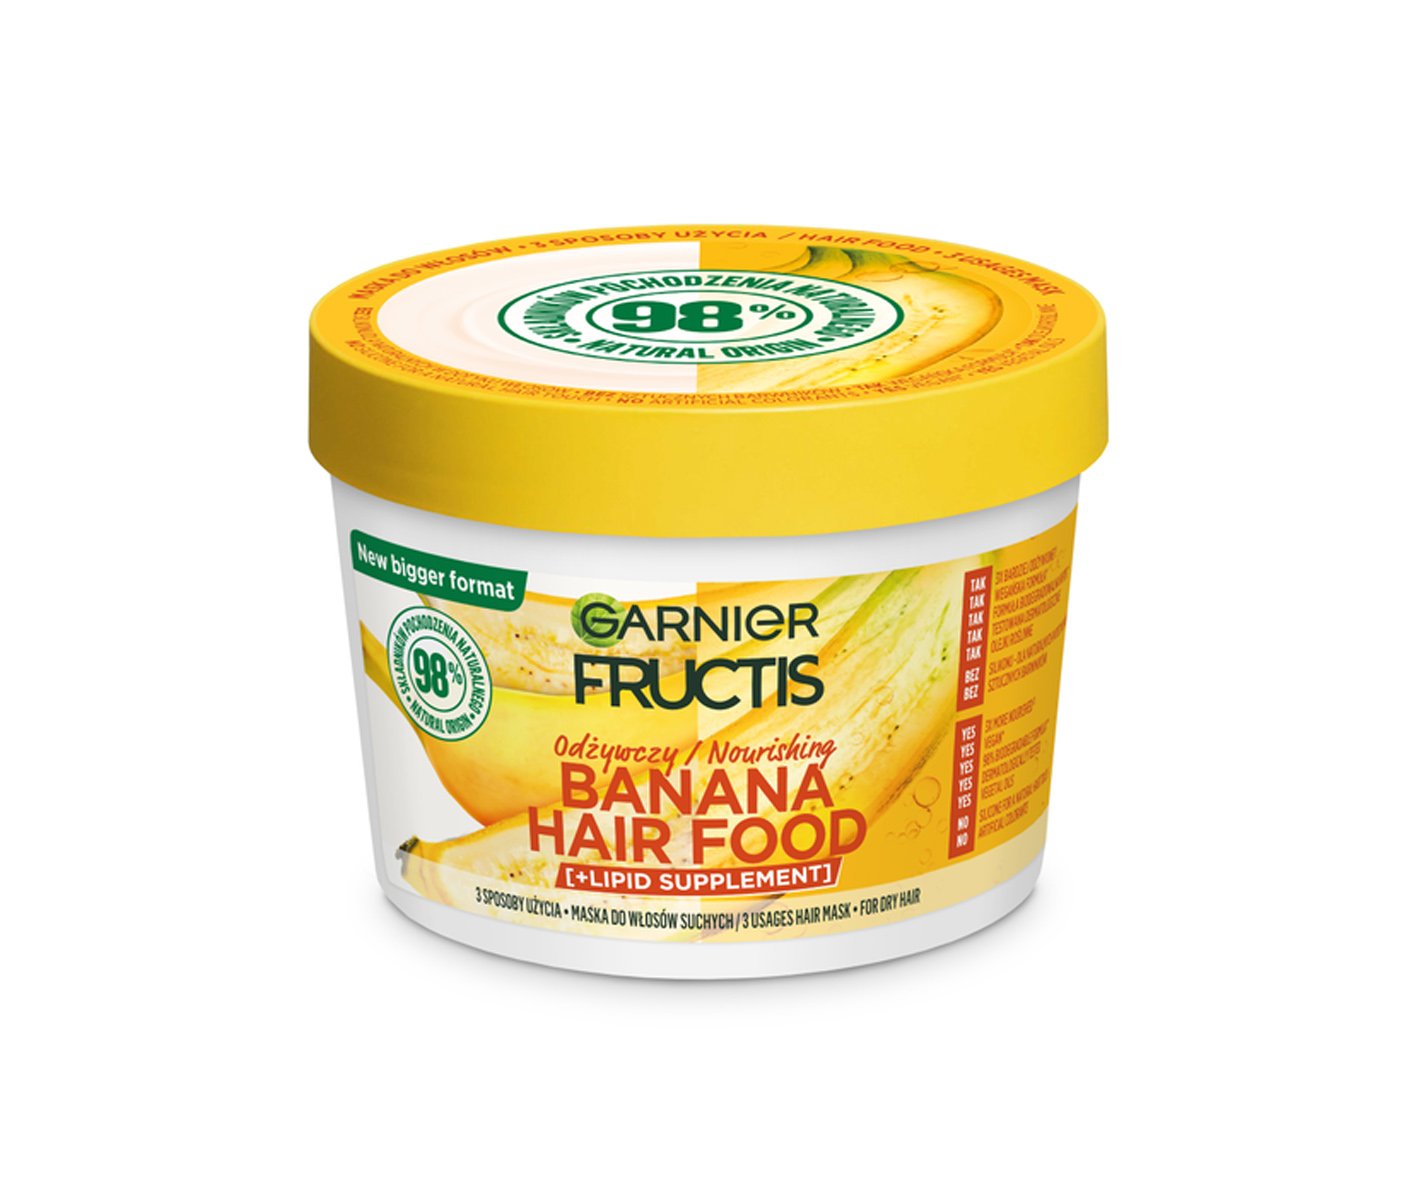 Garnier Fructis, Banana Hair Food, Hair Mask